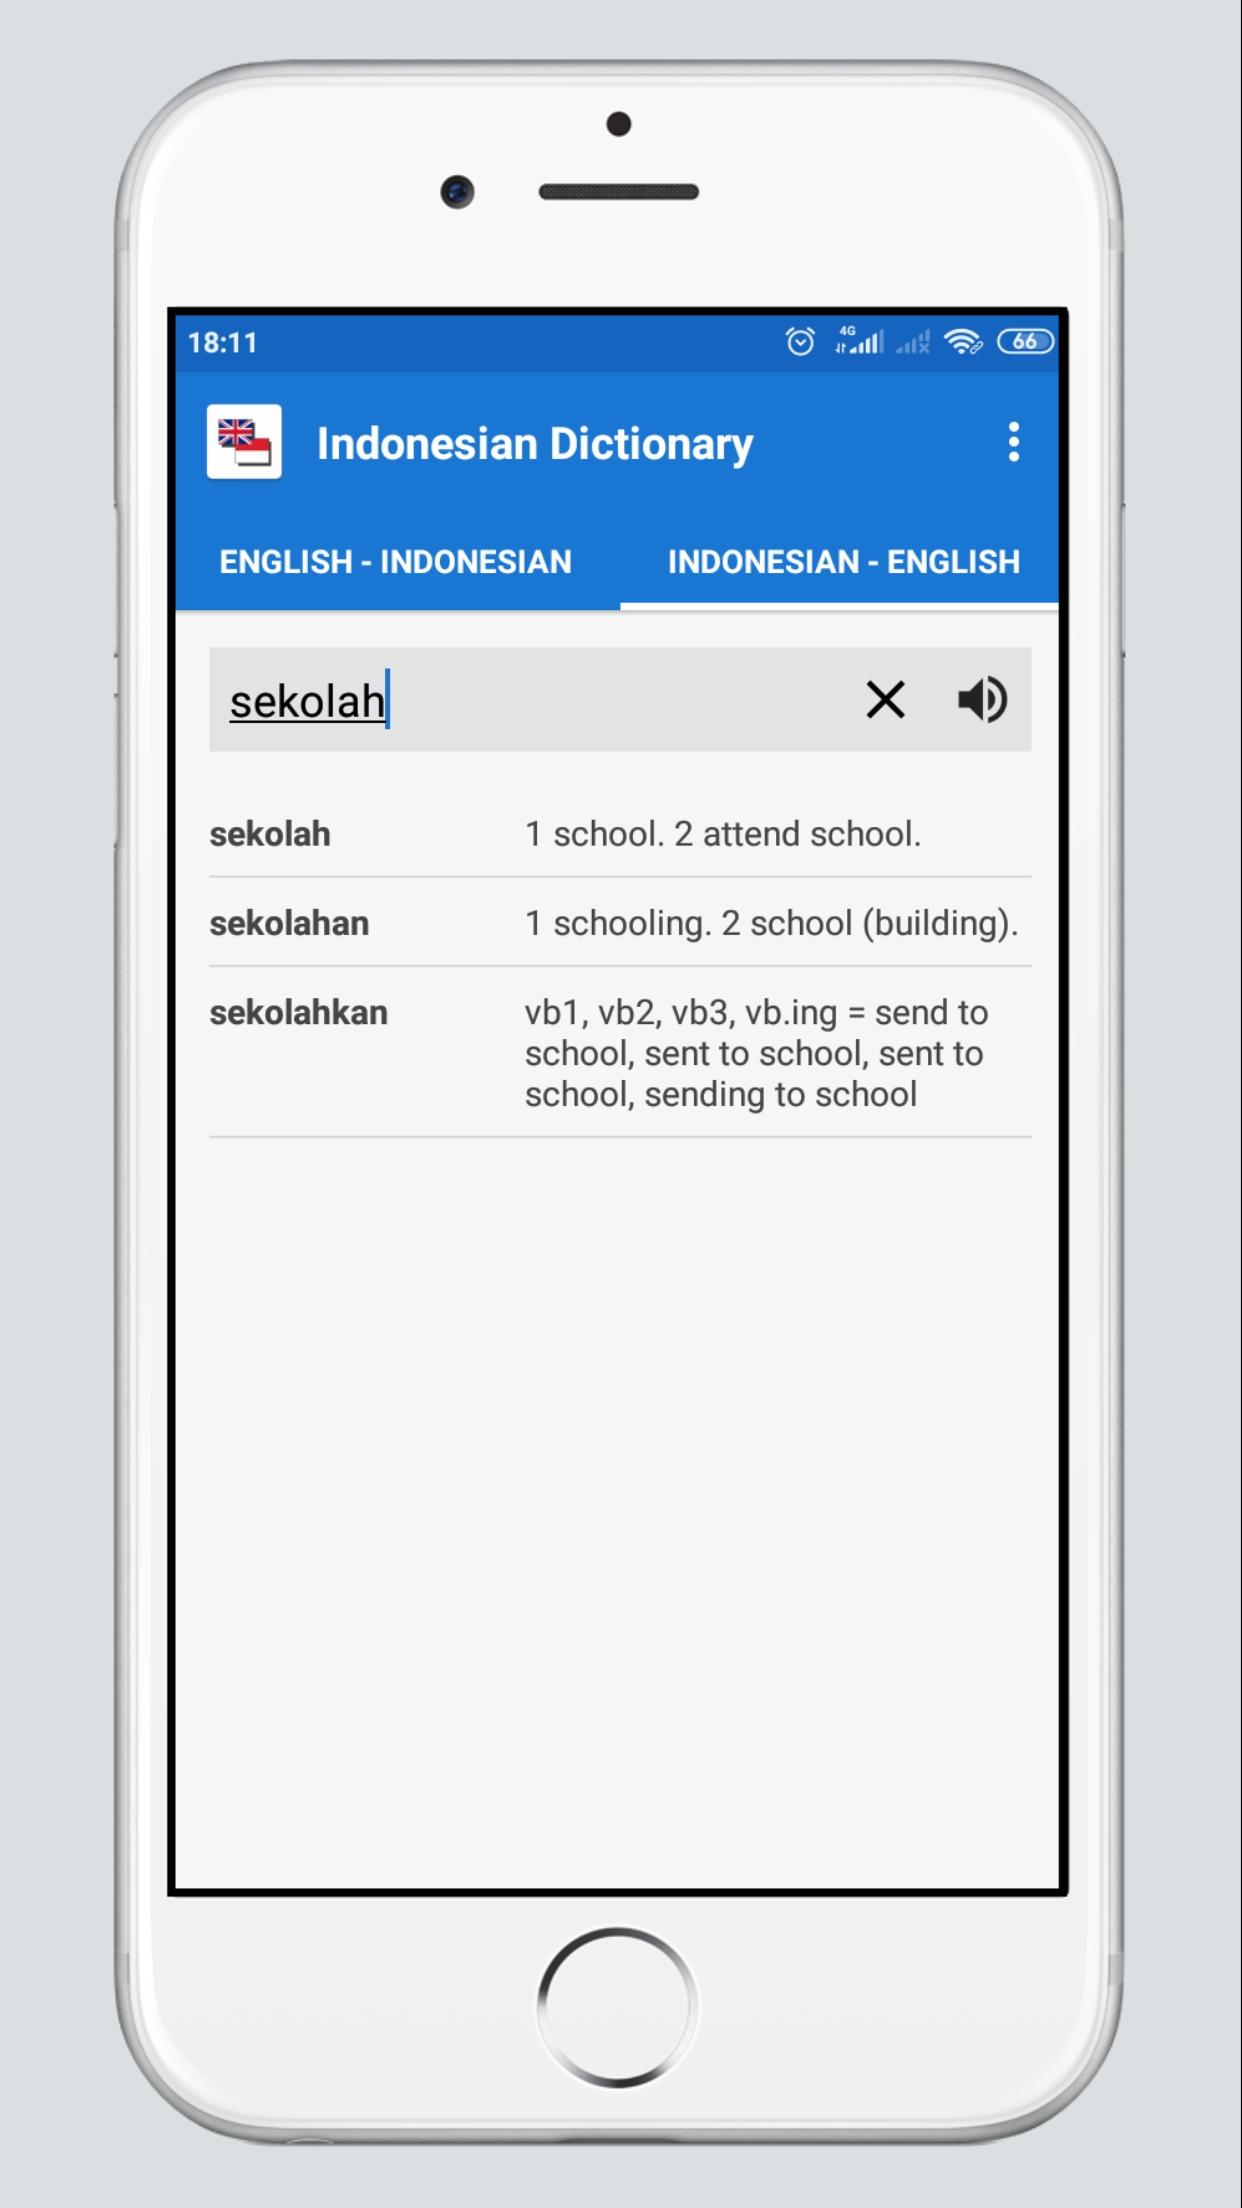 English - Indonesian Dictionary 1.0.2 Screenshot 4